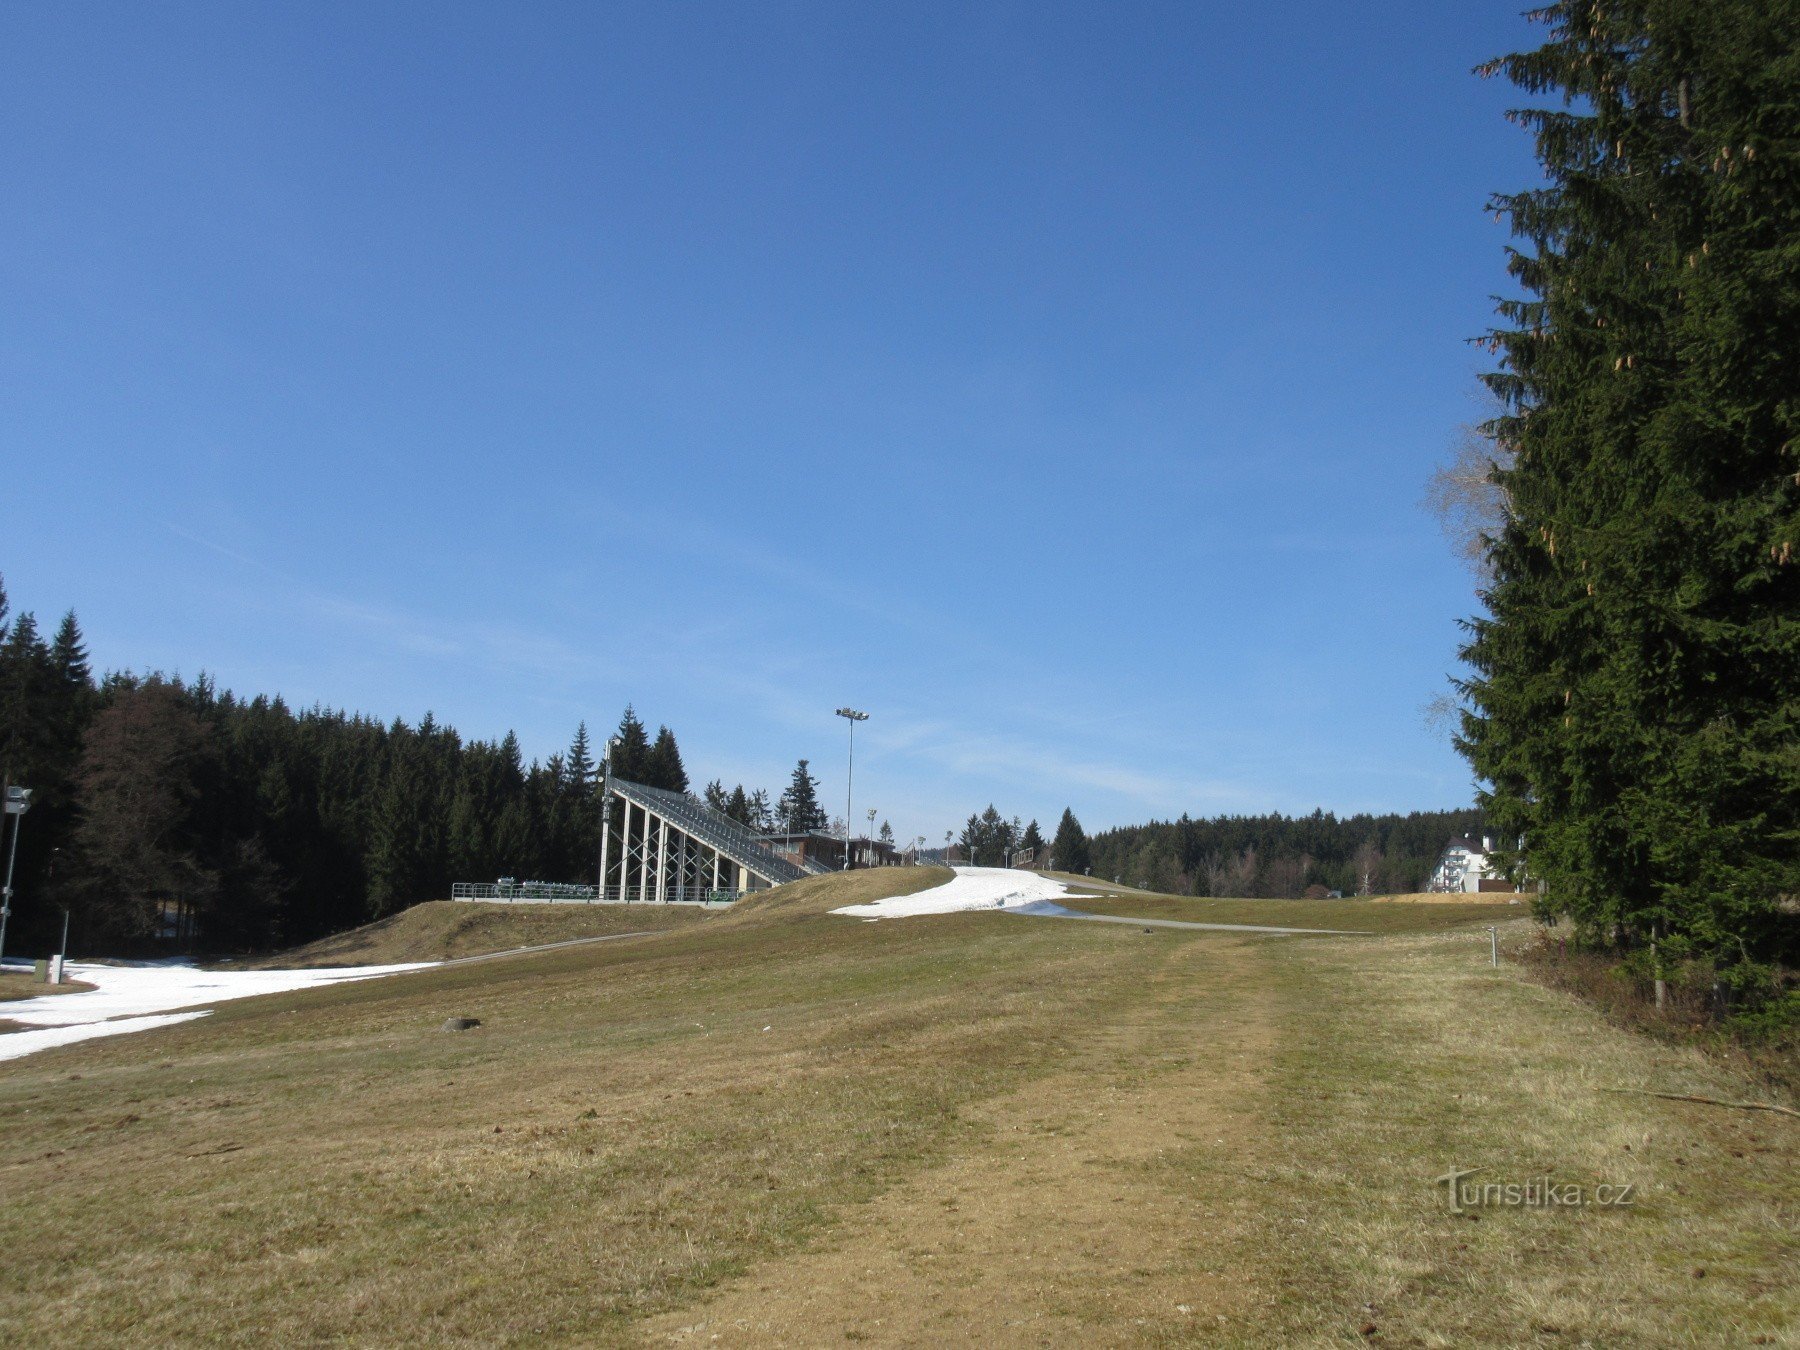 Nové Město – complesso di biathlon Vysočina arena e la storia degli sport invernali